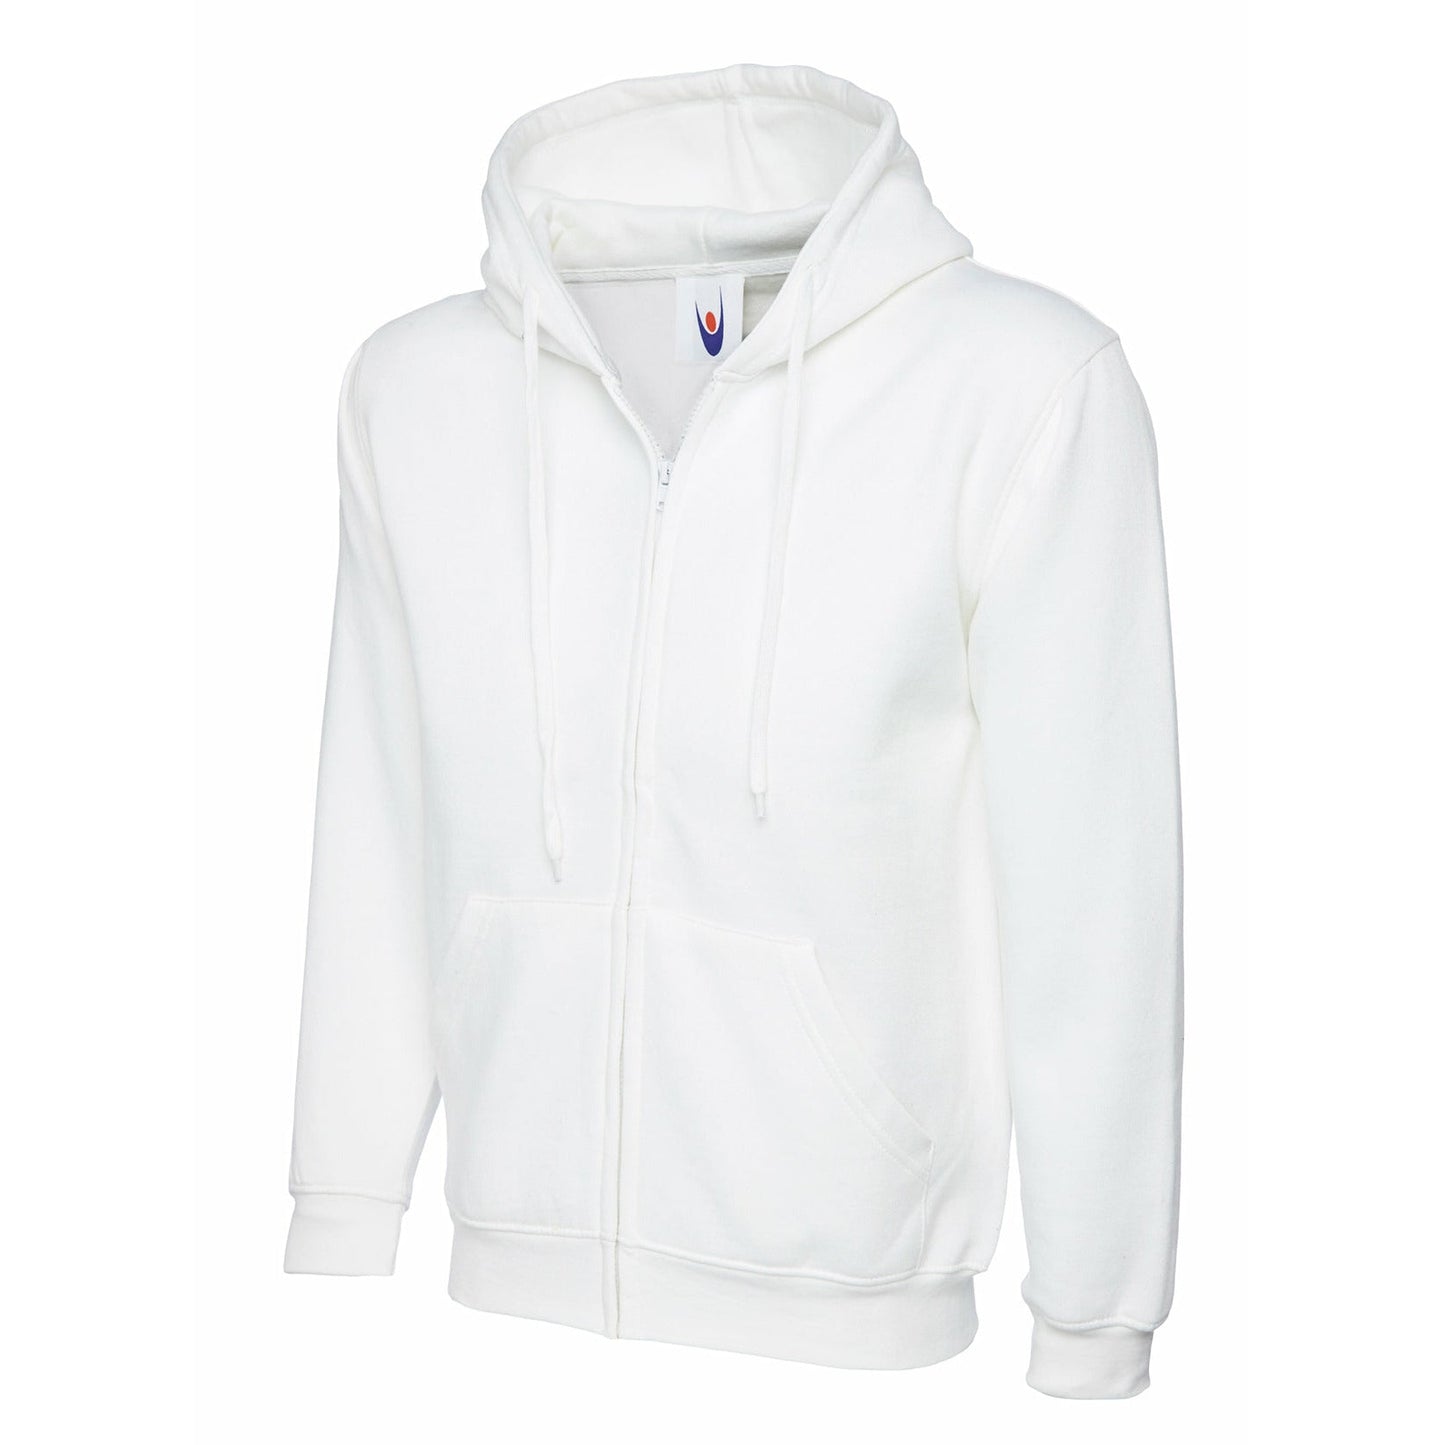 Adults Classic Full Zip Hooded Sweatshirt White